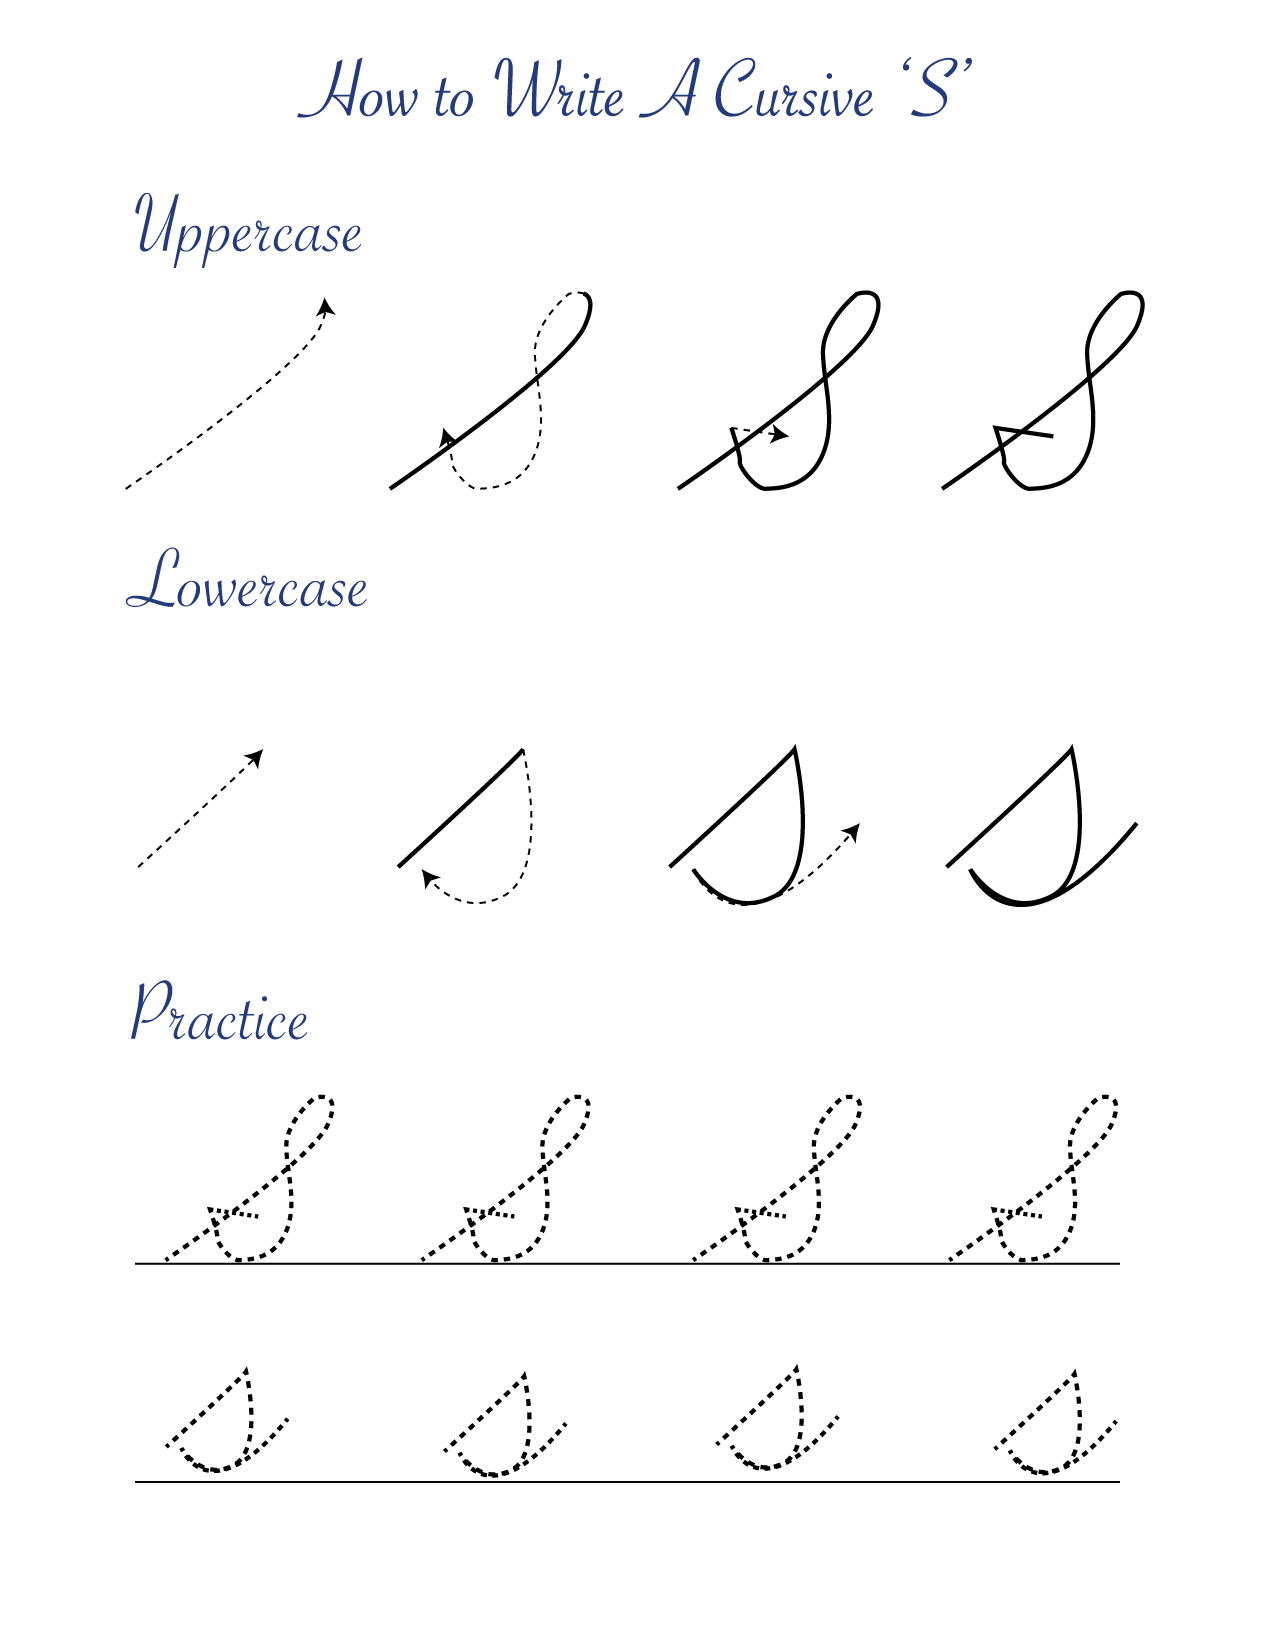 How to write a cursive S